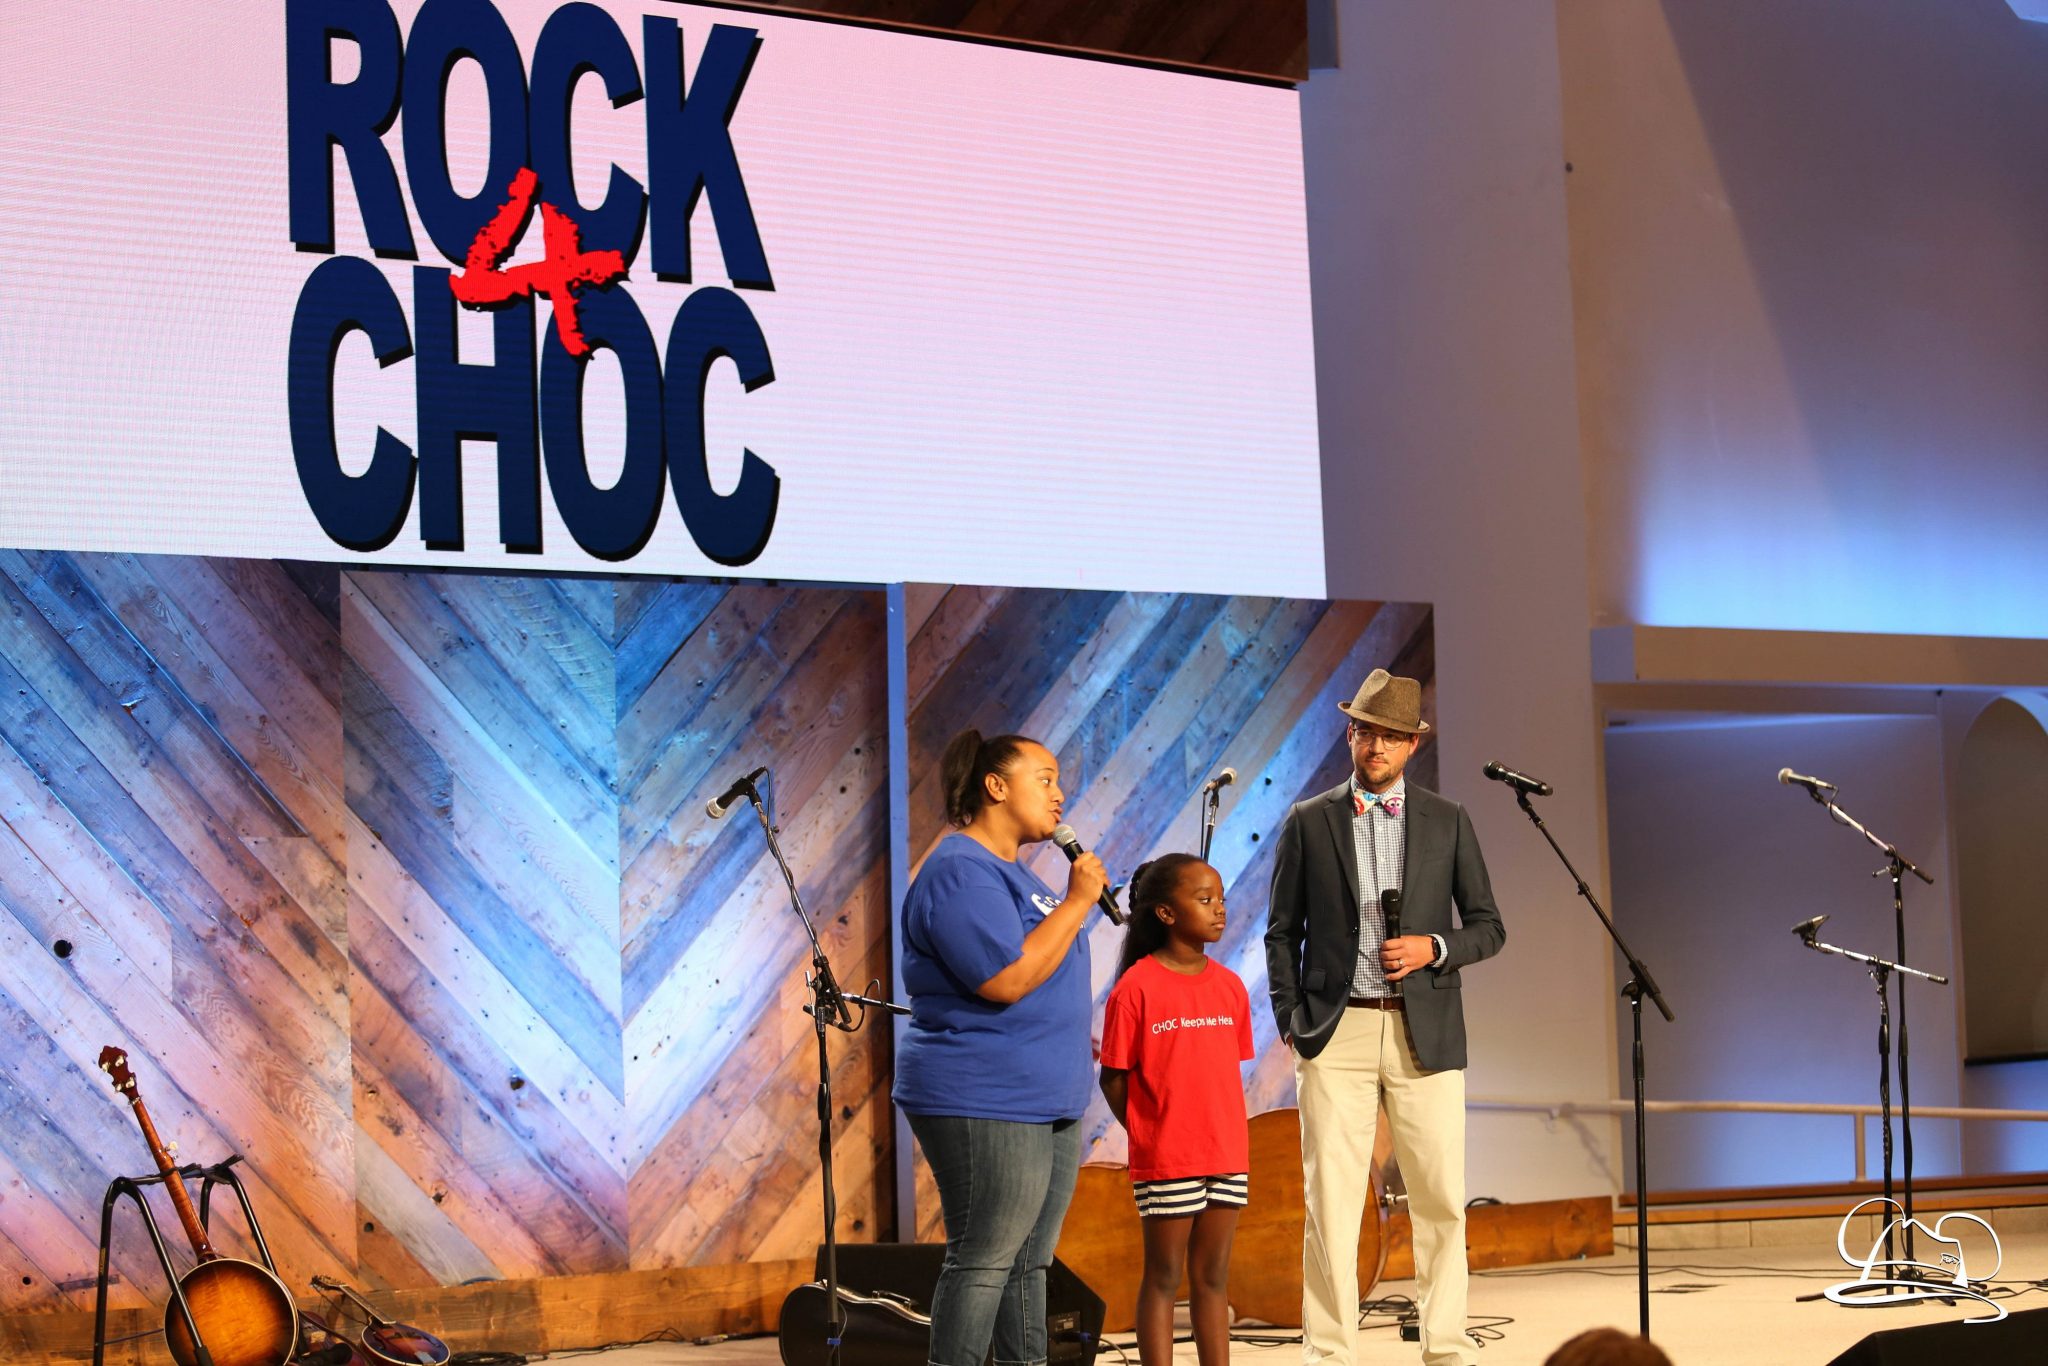 ROCK4CHOC Raises Thousands for CHOC Children’s